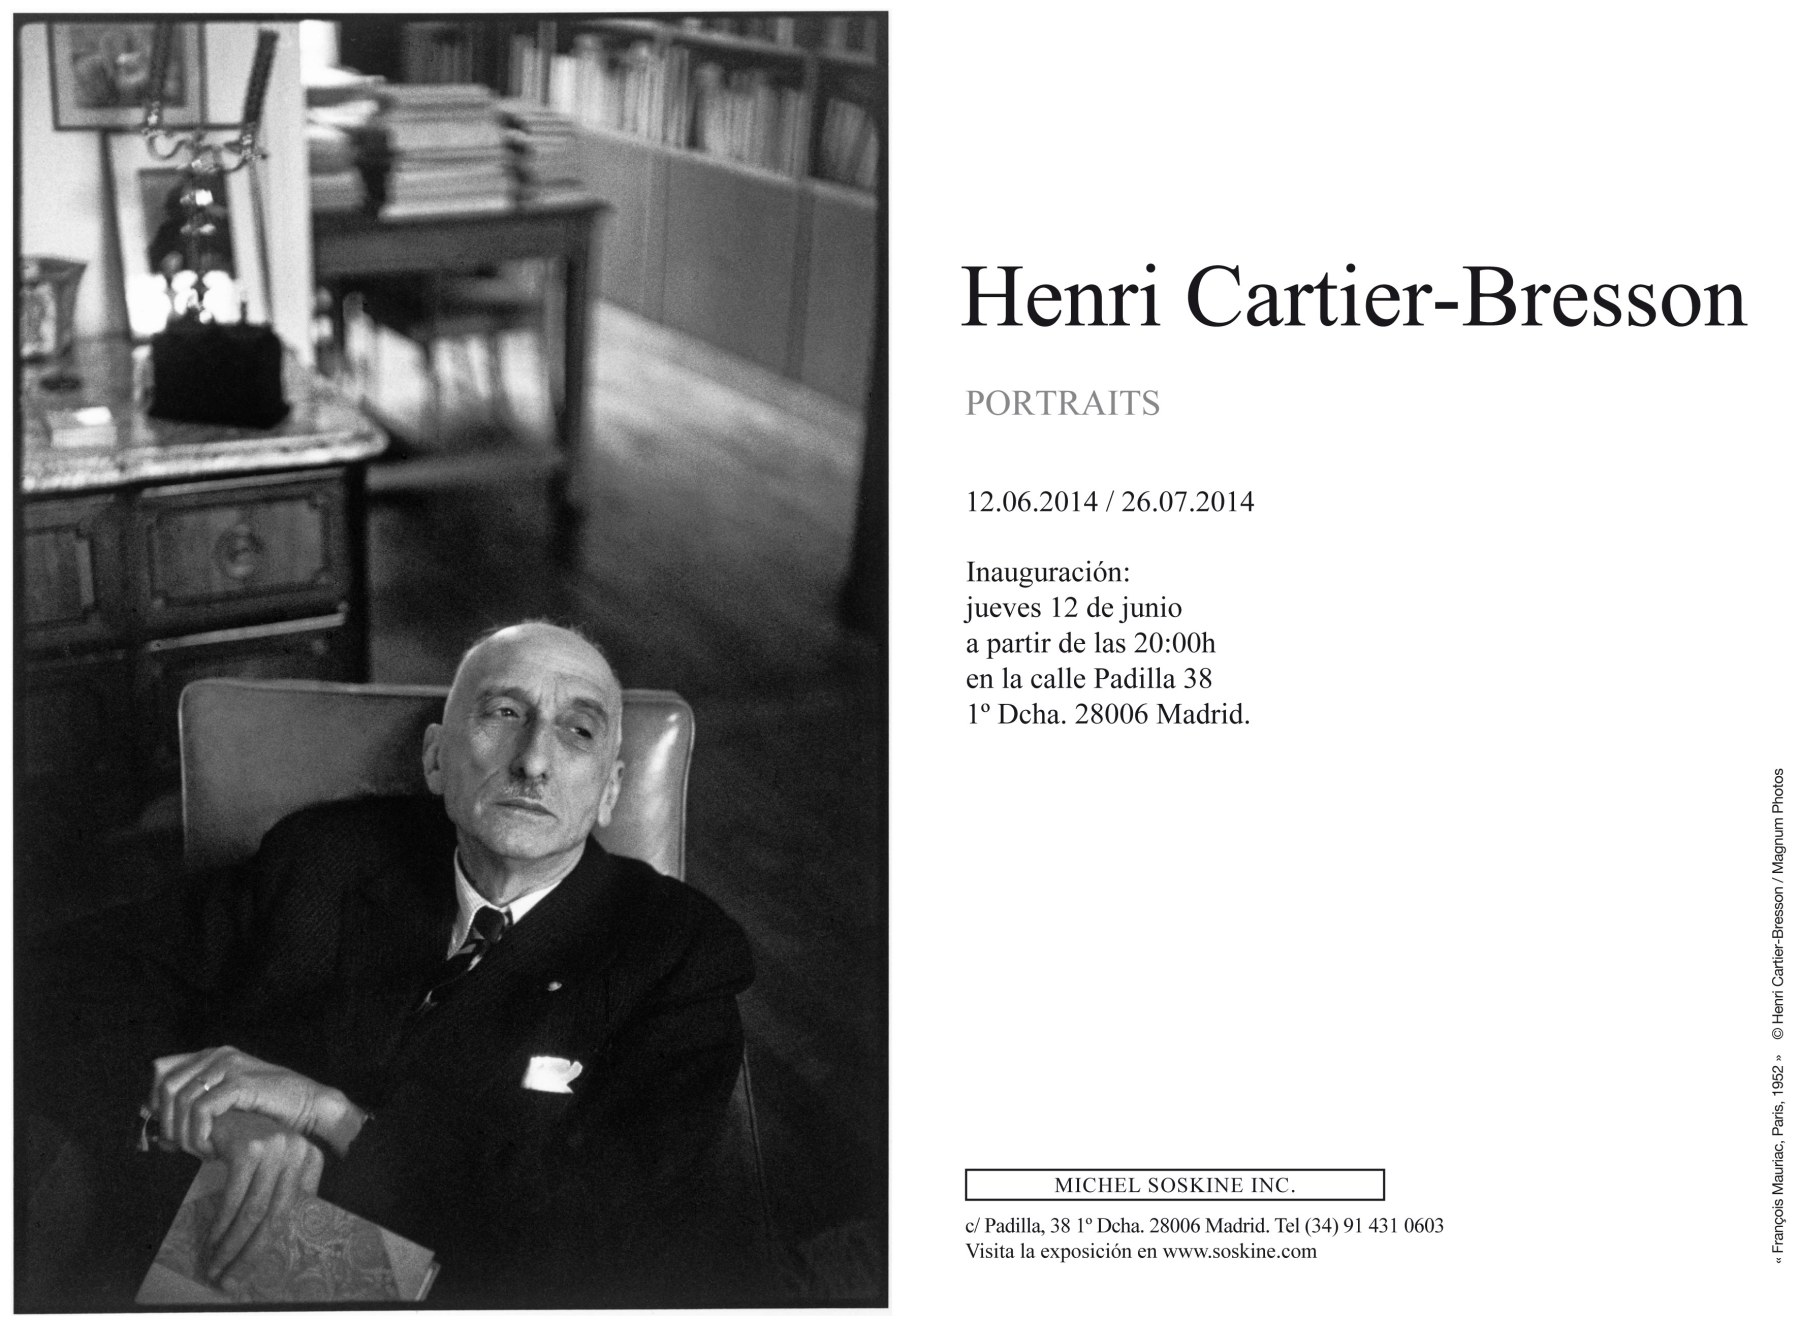 HENRI CARTIER-BRESSON, Portraits